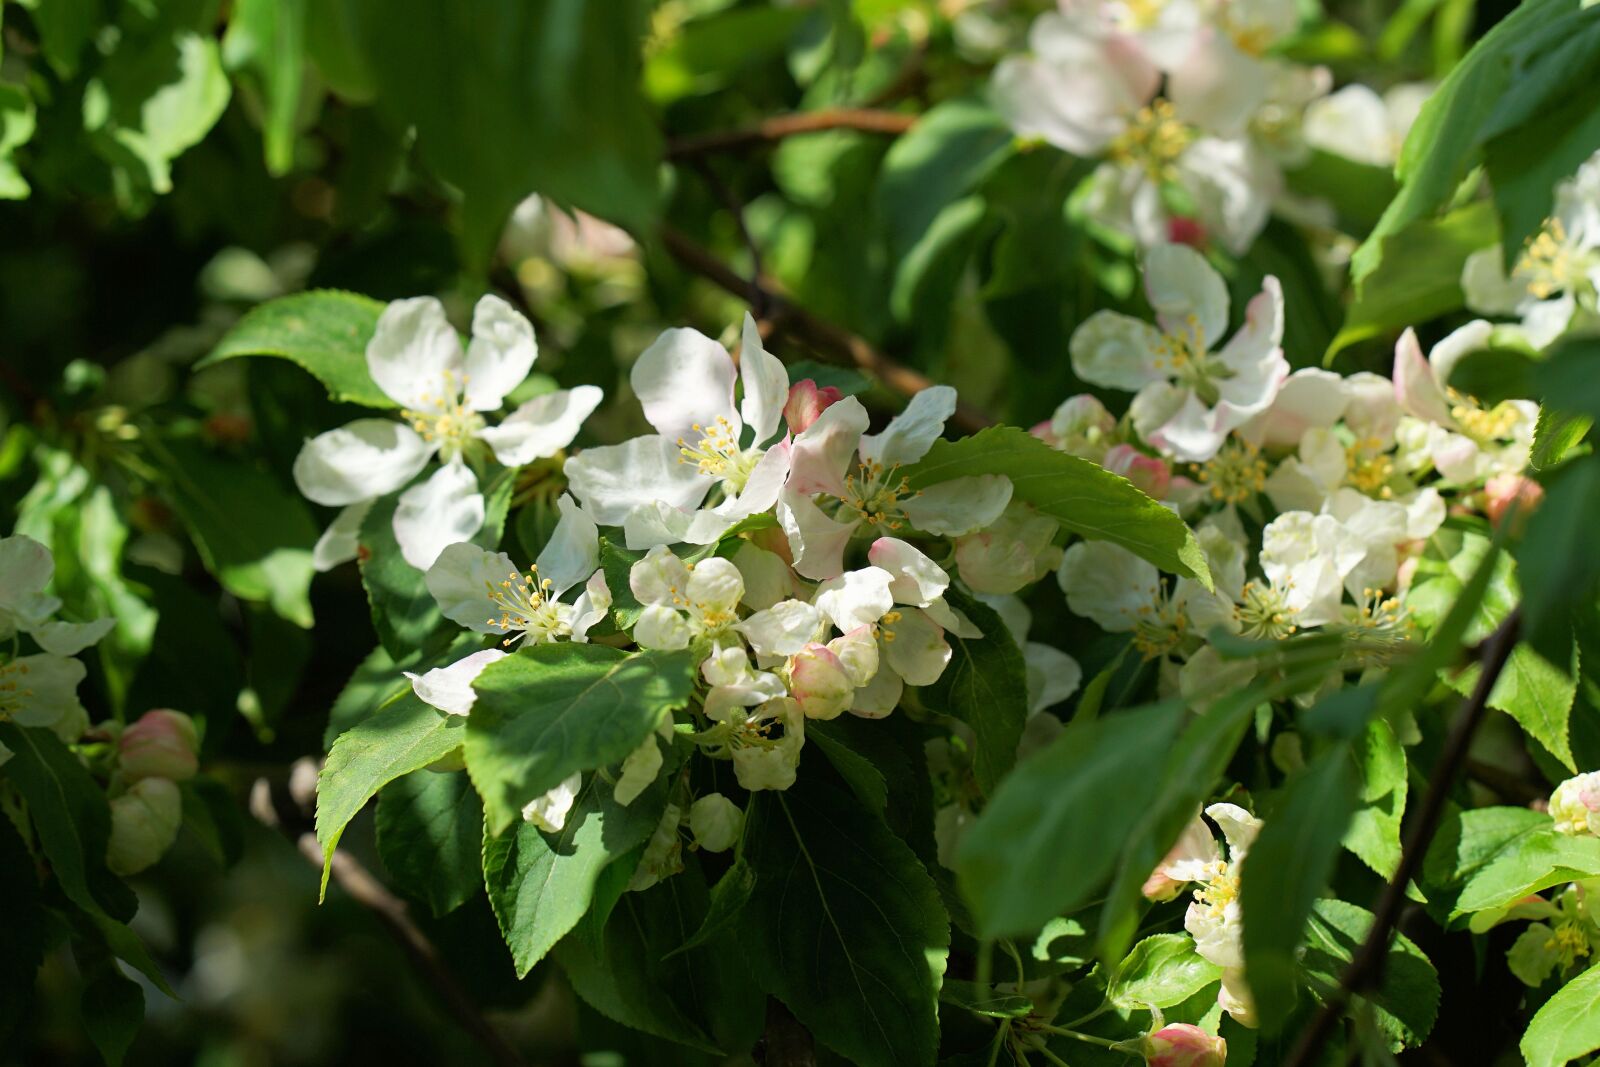 ZEISS Batis 85mm F1.8 sample photo. Embellishment, spring, apple blossom photography